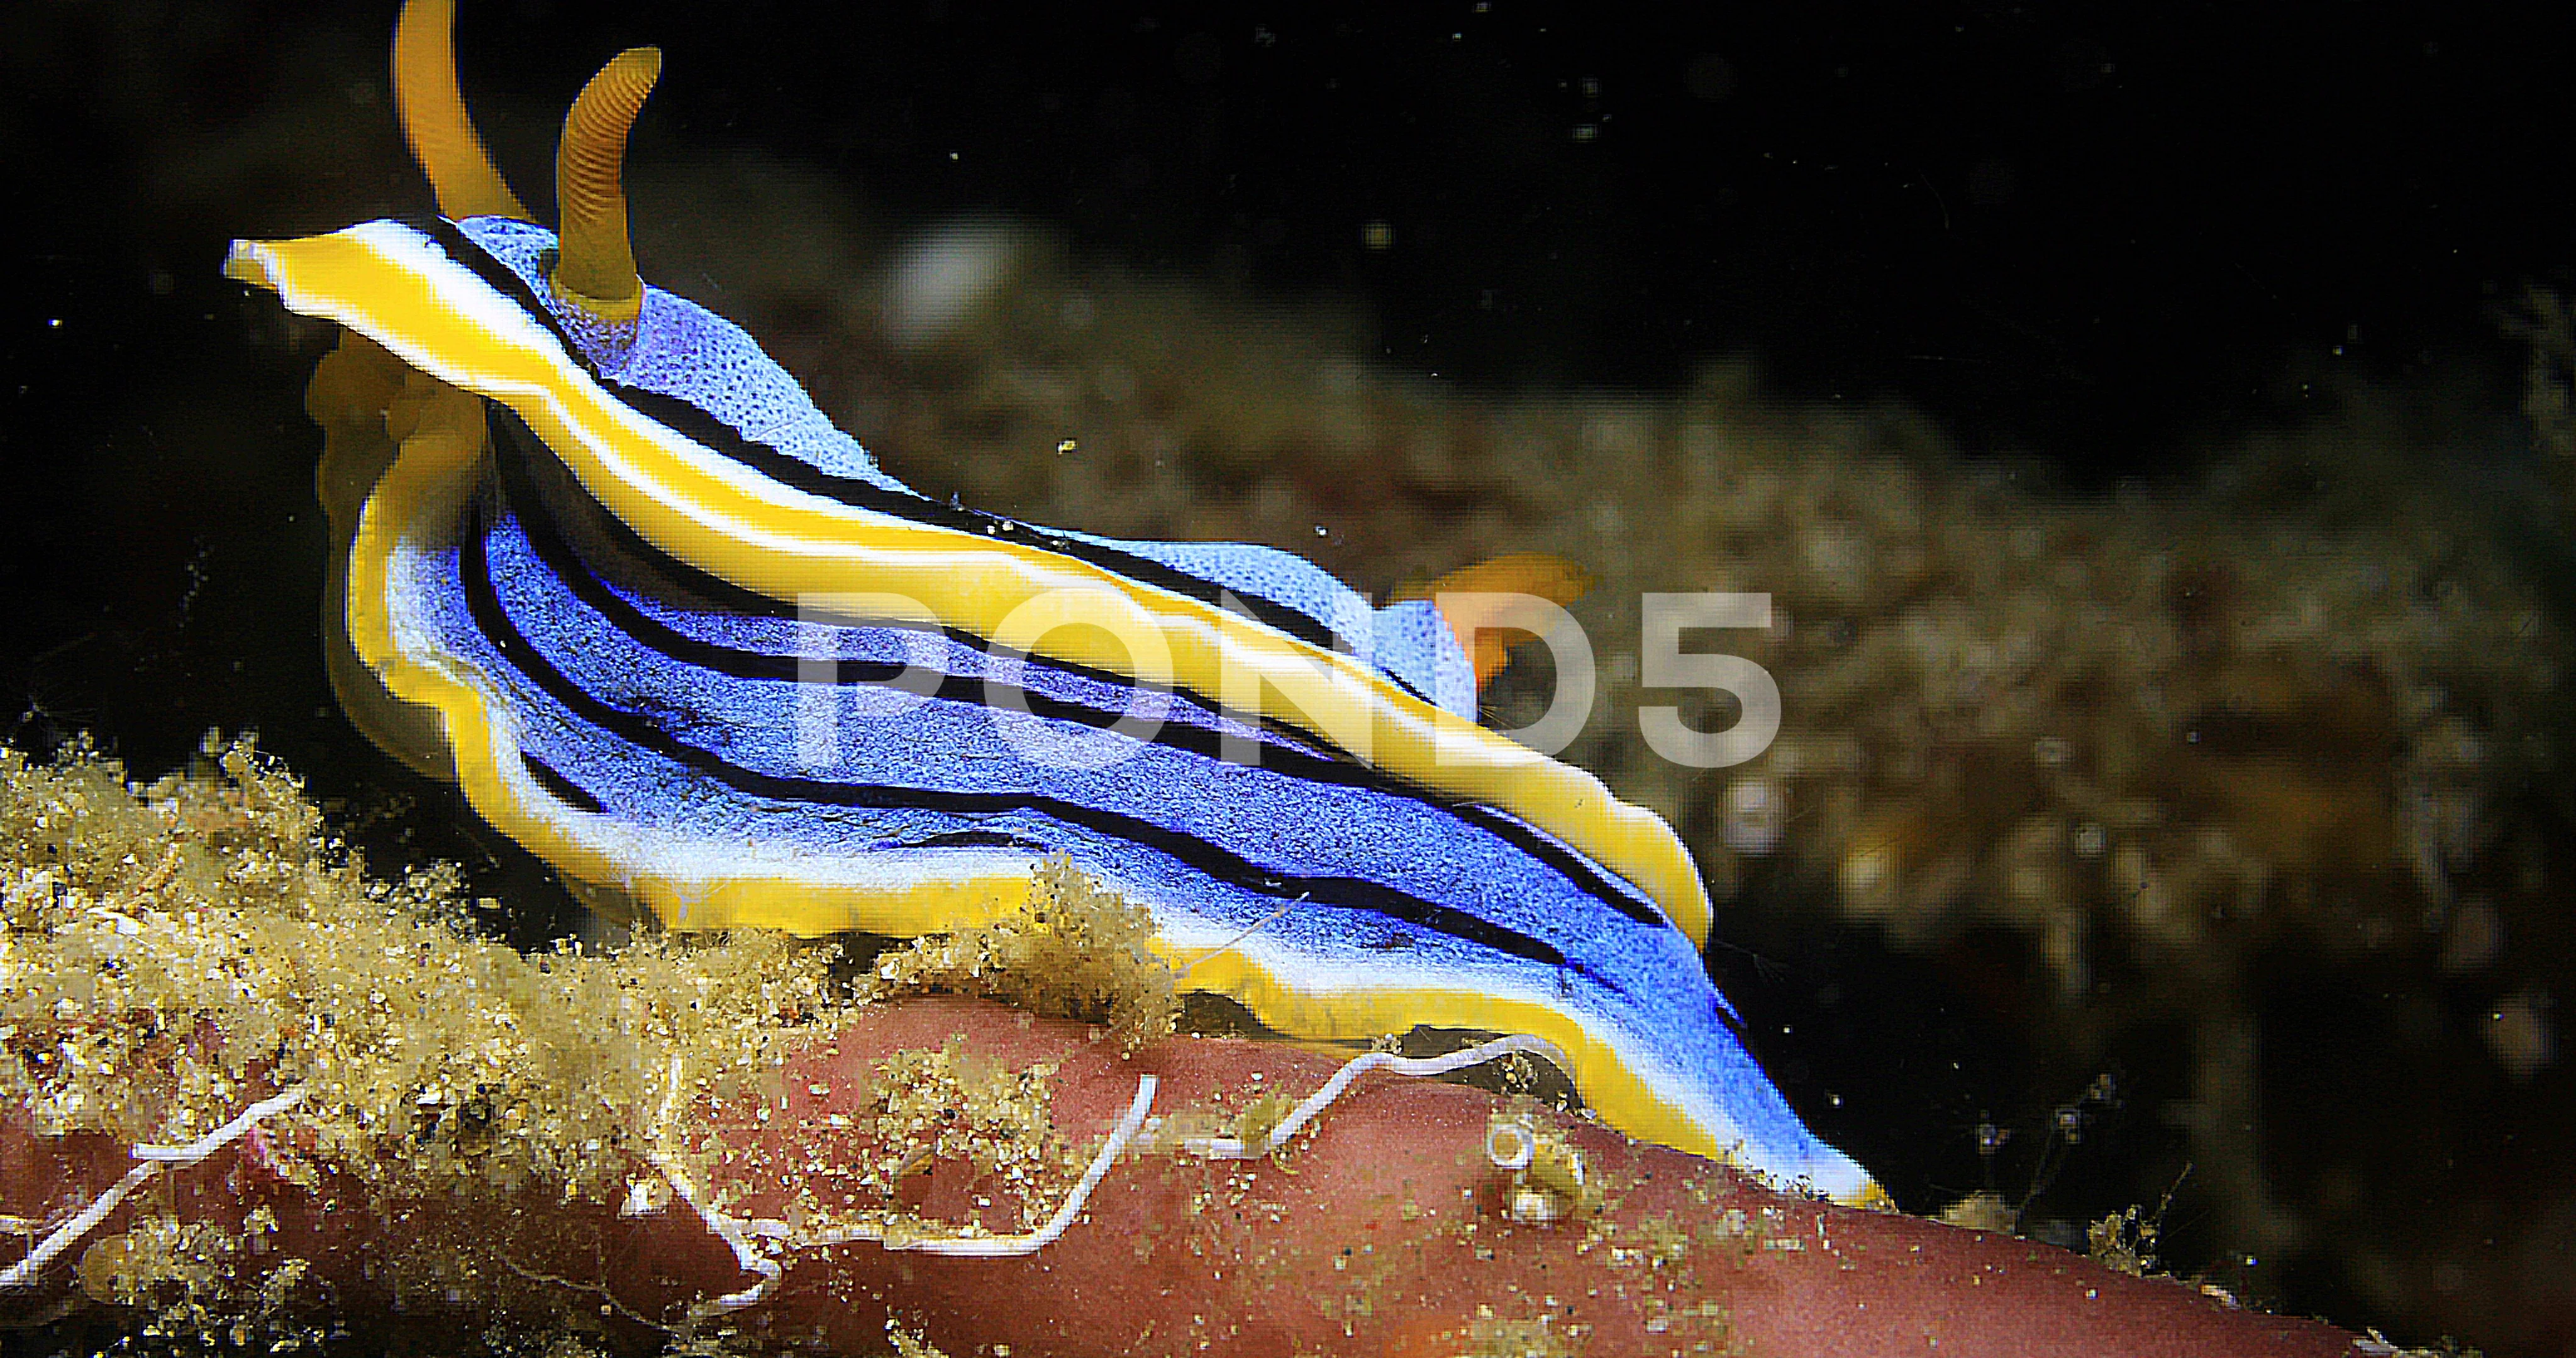 electric sea slug